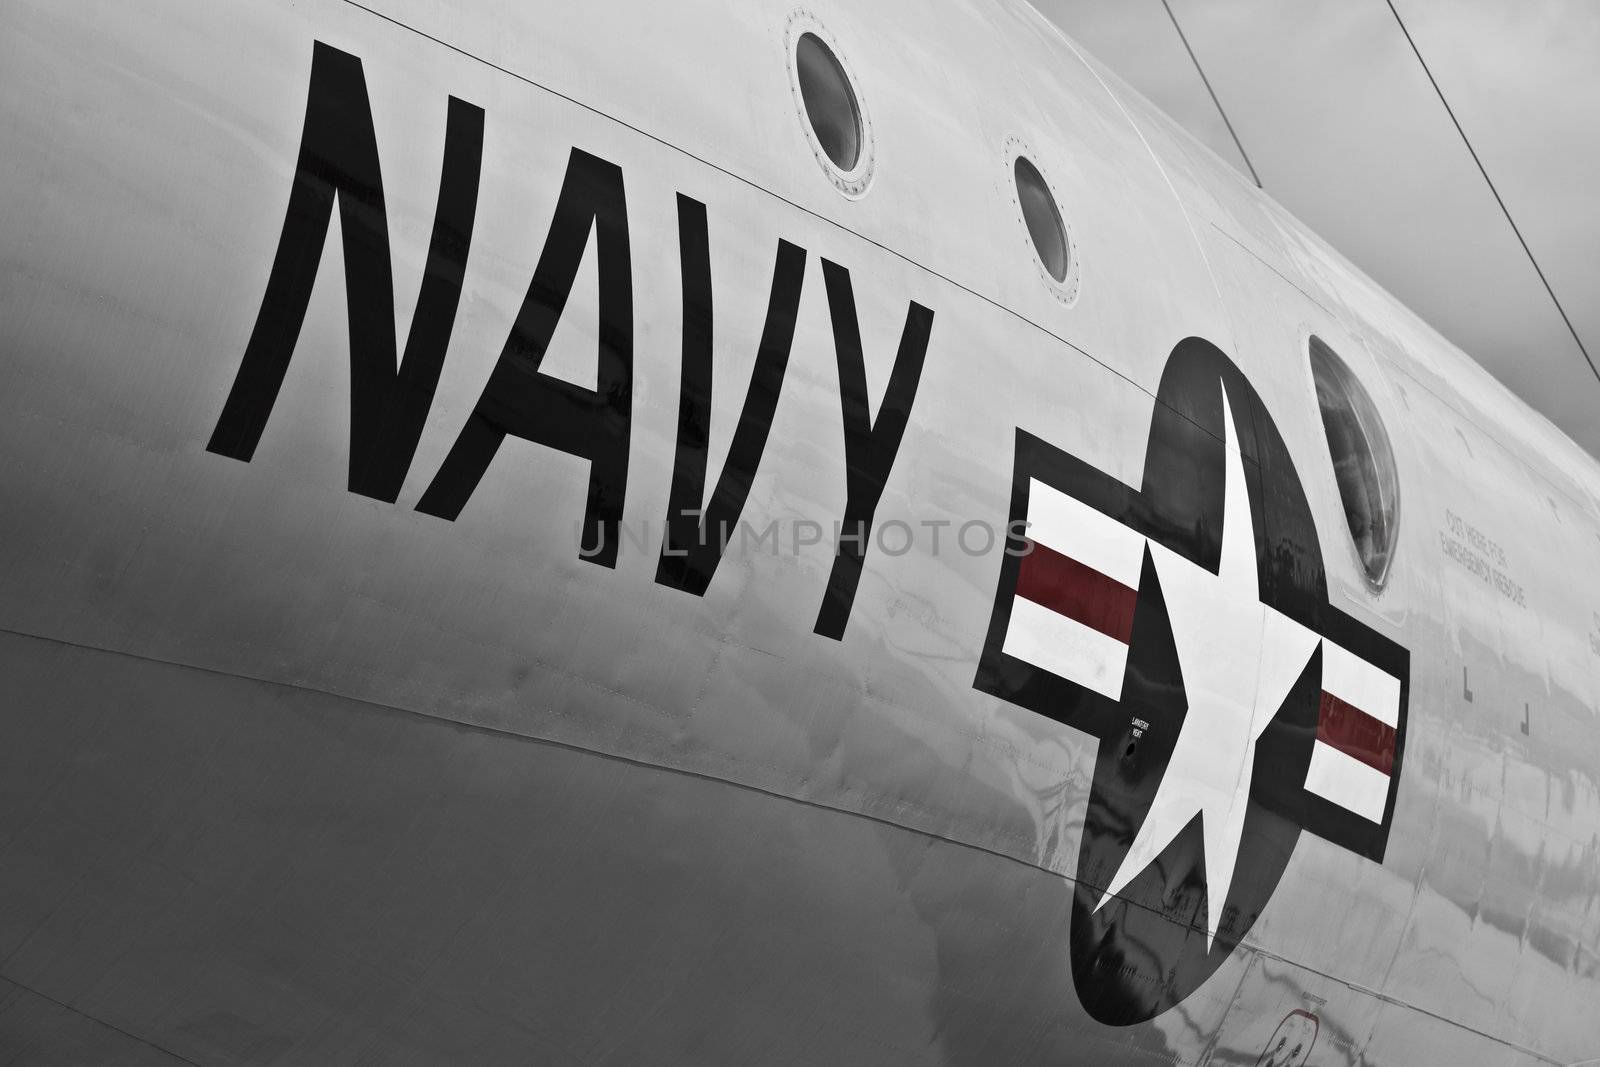 USAF NAVY by PhotoWorks